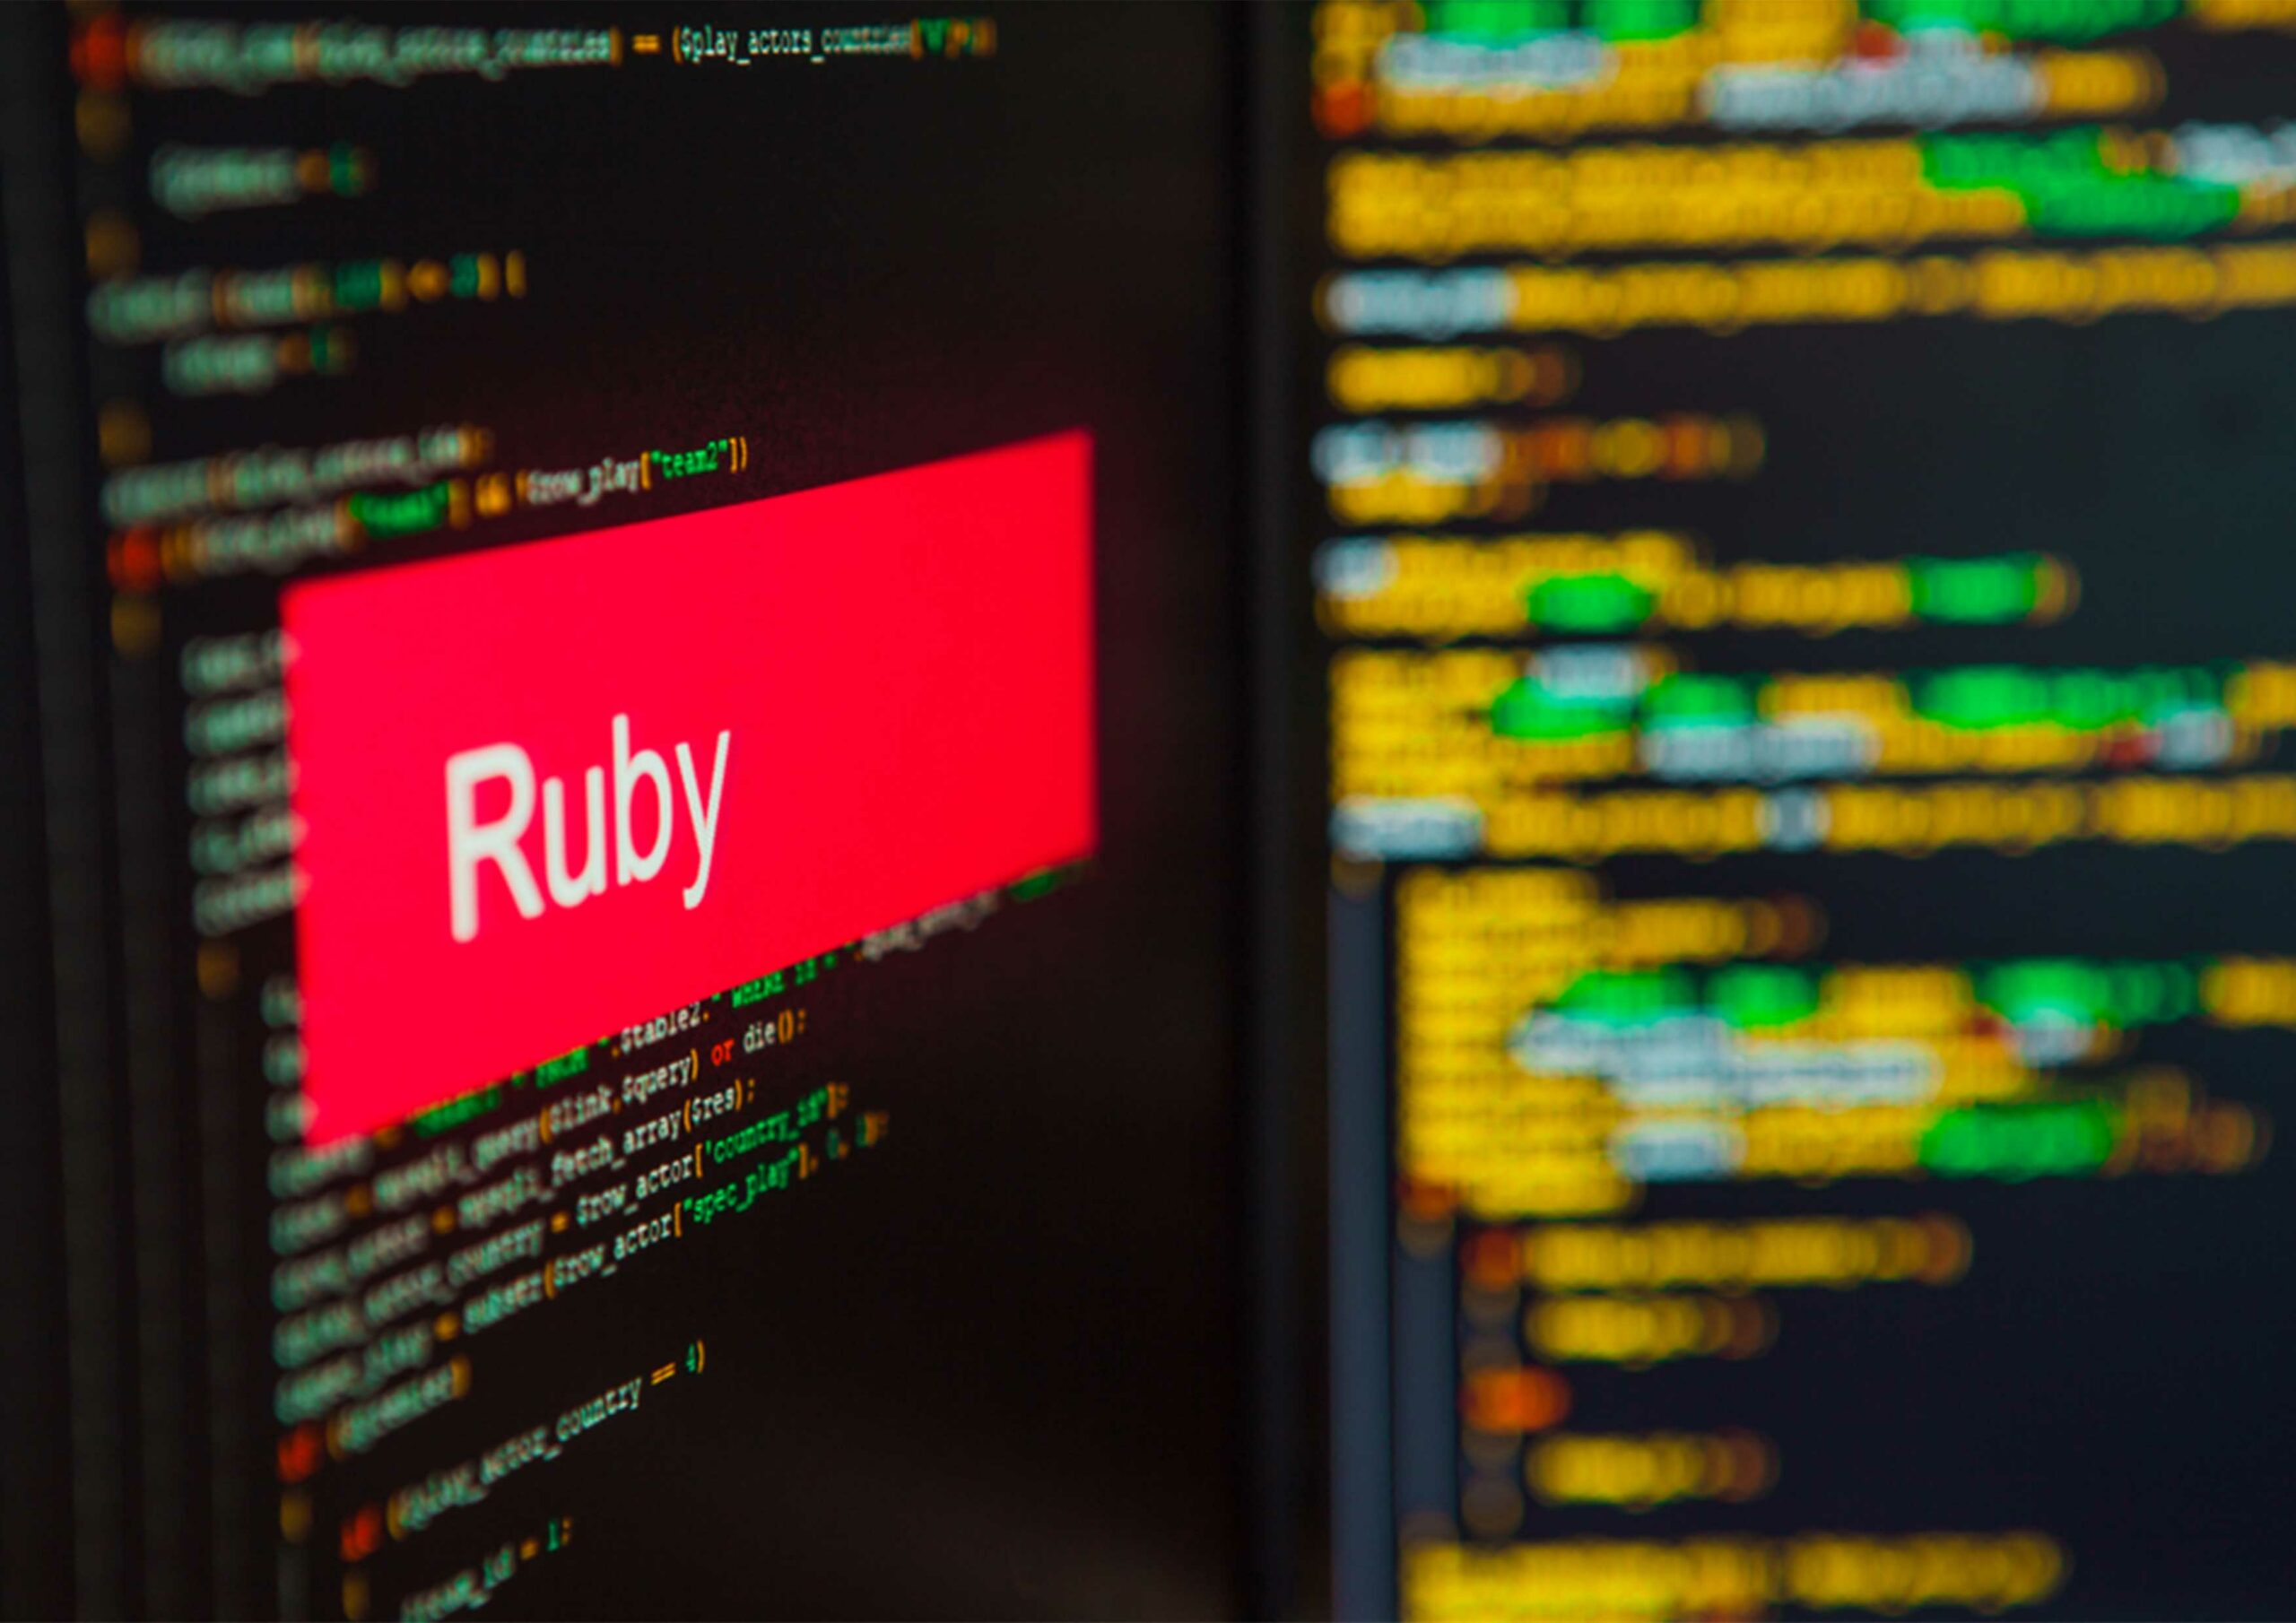 Ruby Programming Training